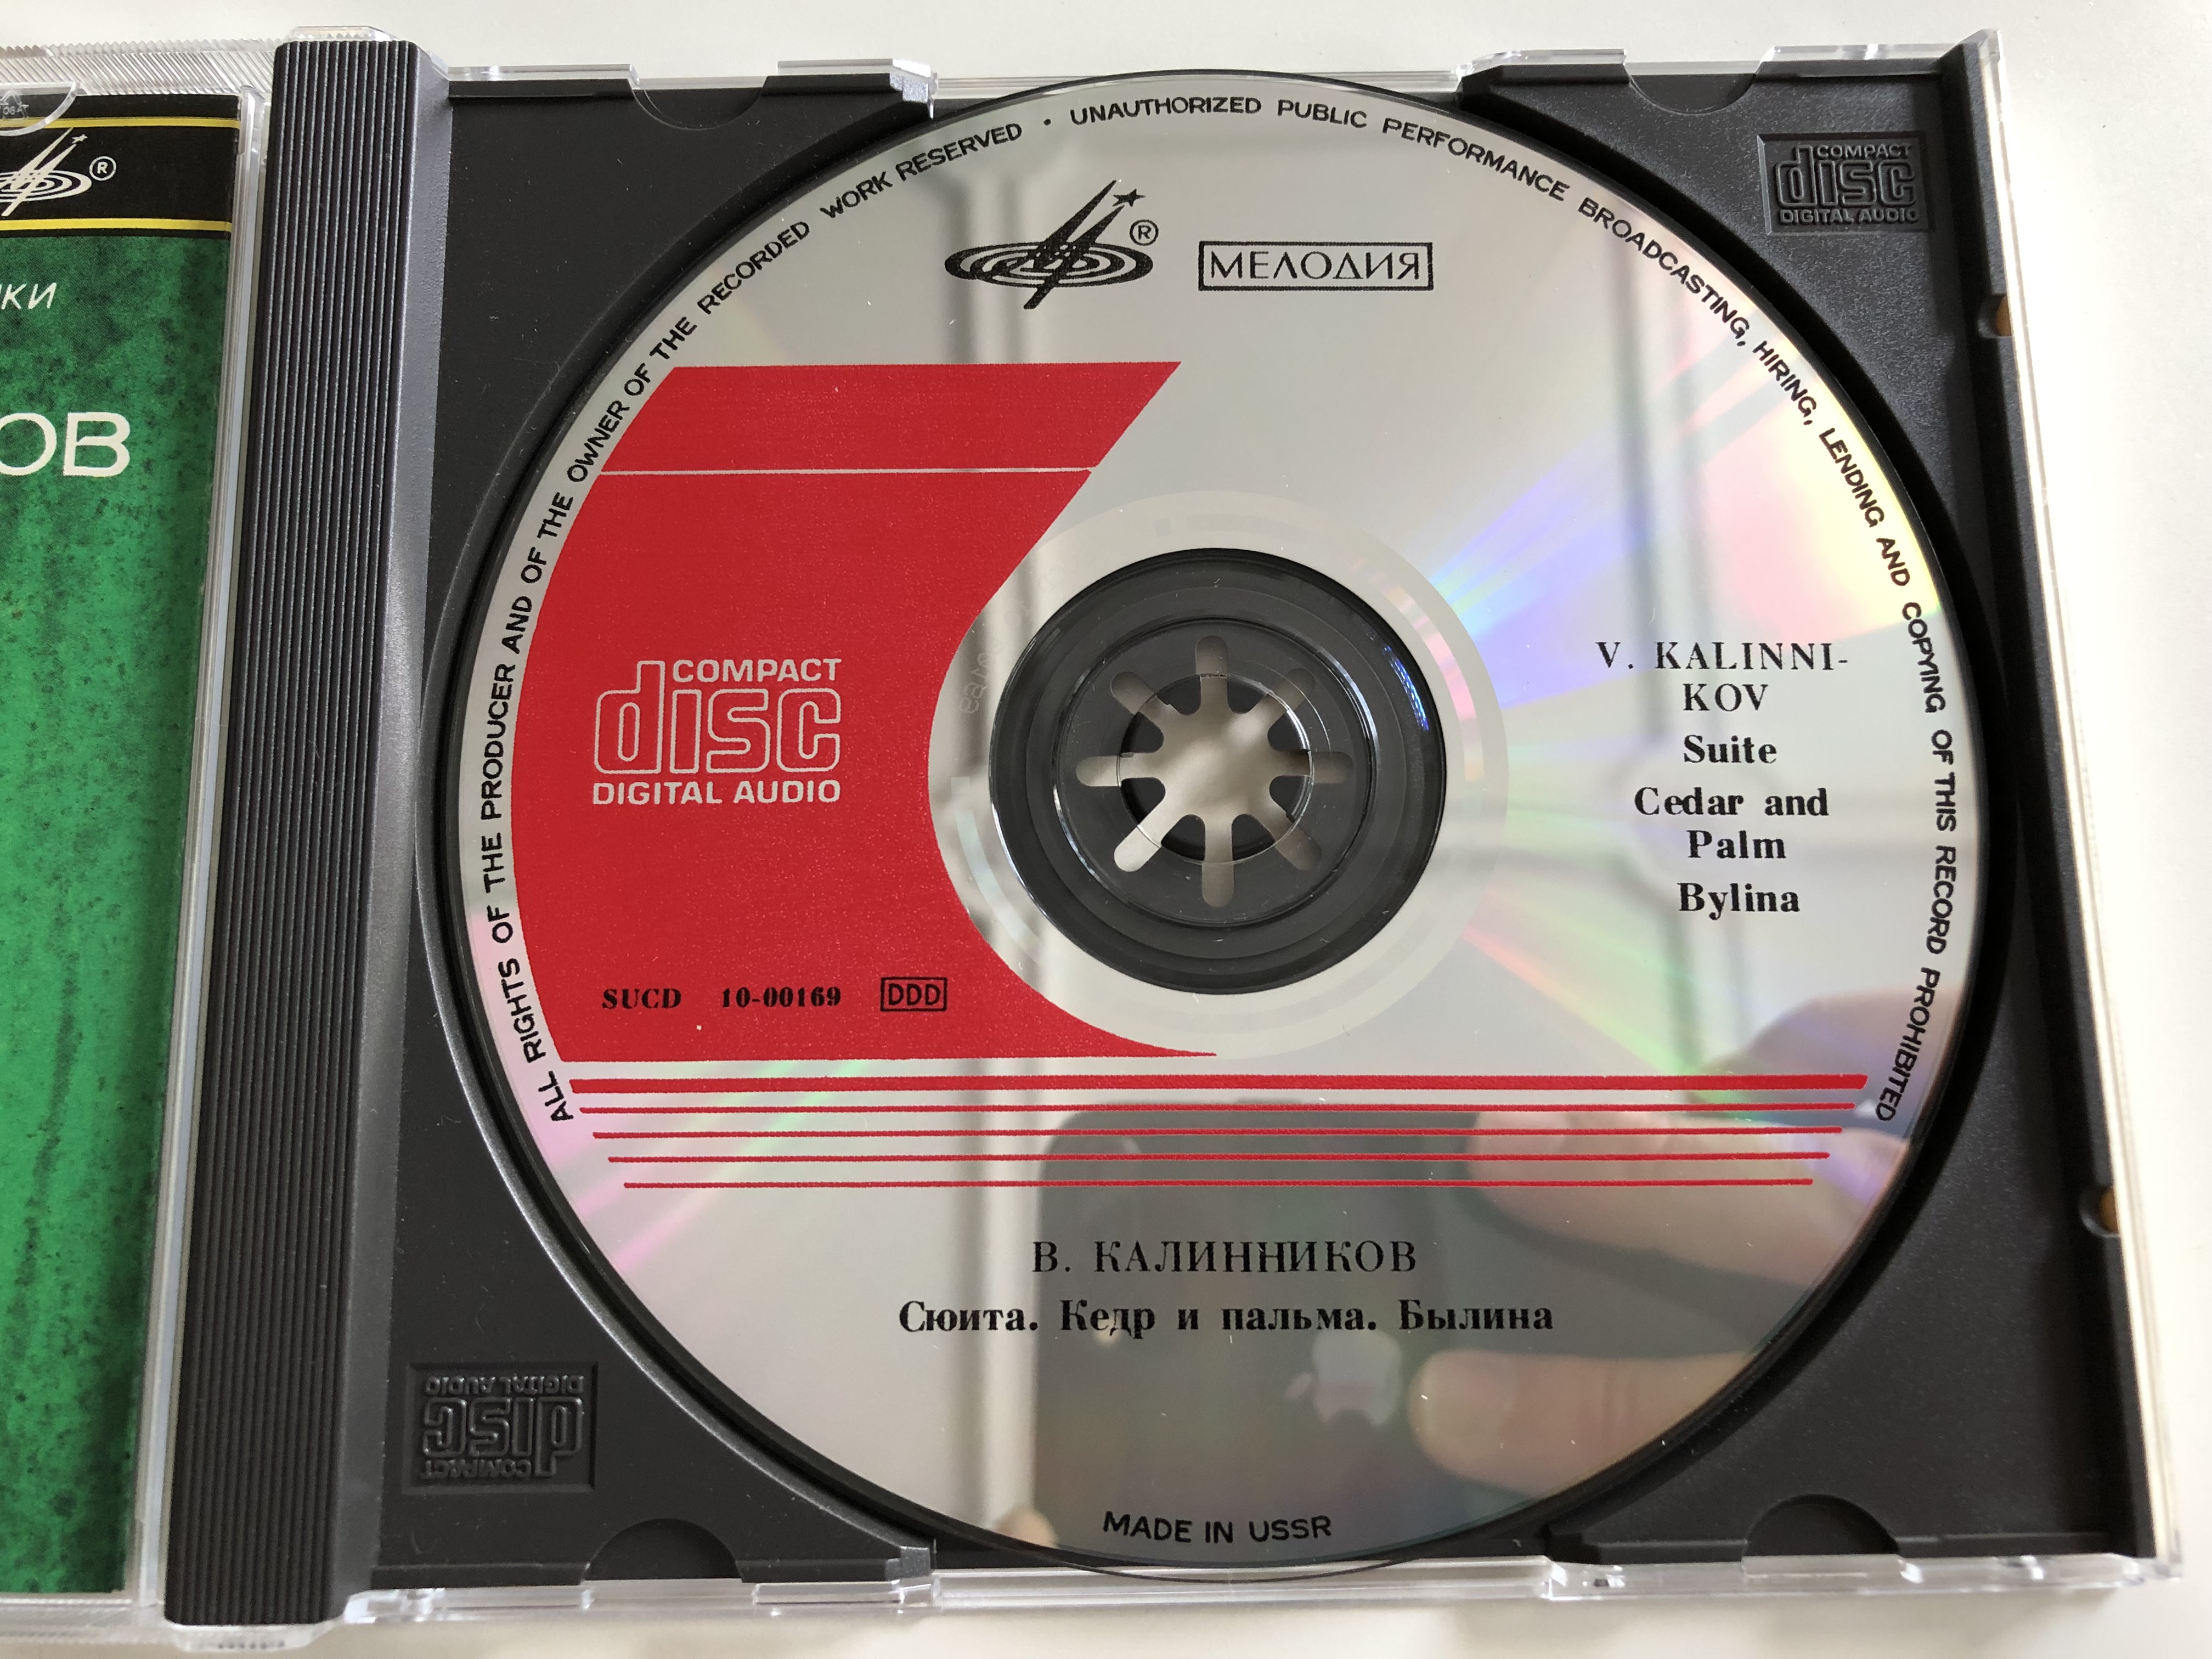 -v.-kalinnikov-suite-cedar-and-palm-bylina-conductor-evgeni-svetlanov-anthology-of-russian-symphony-music-33-ussr-audio-cd-1991-5-.jpg